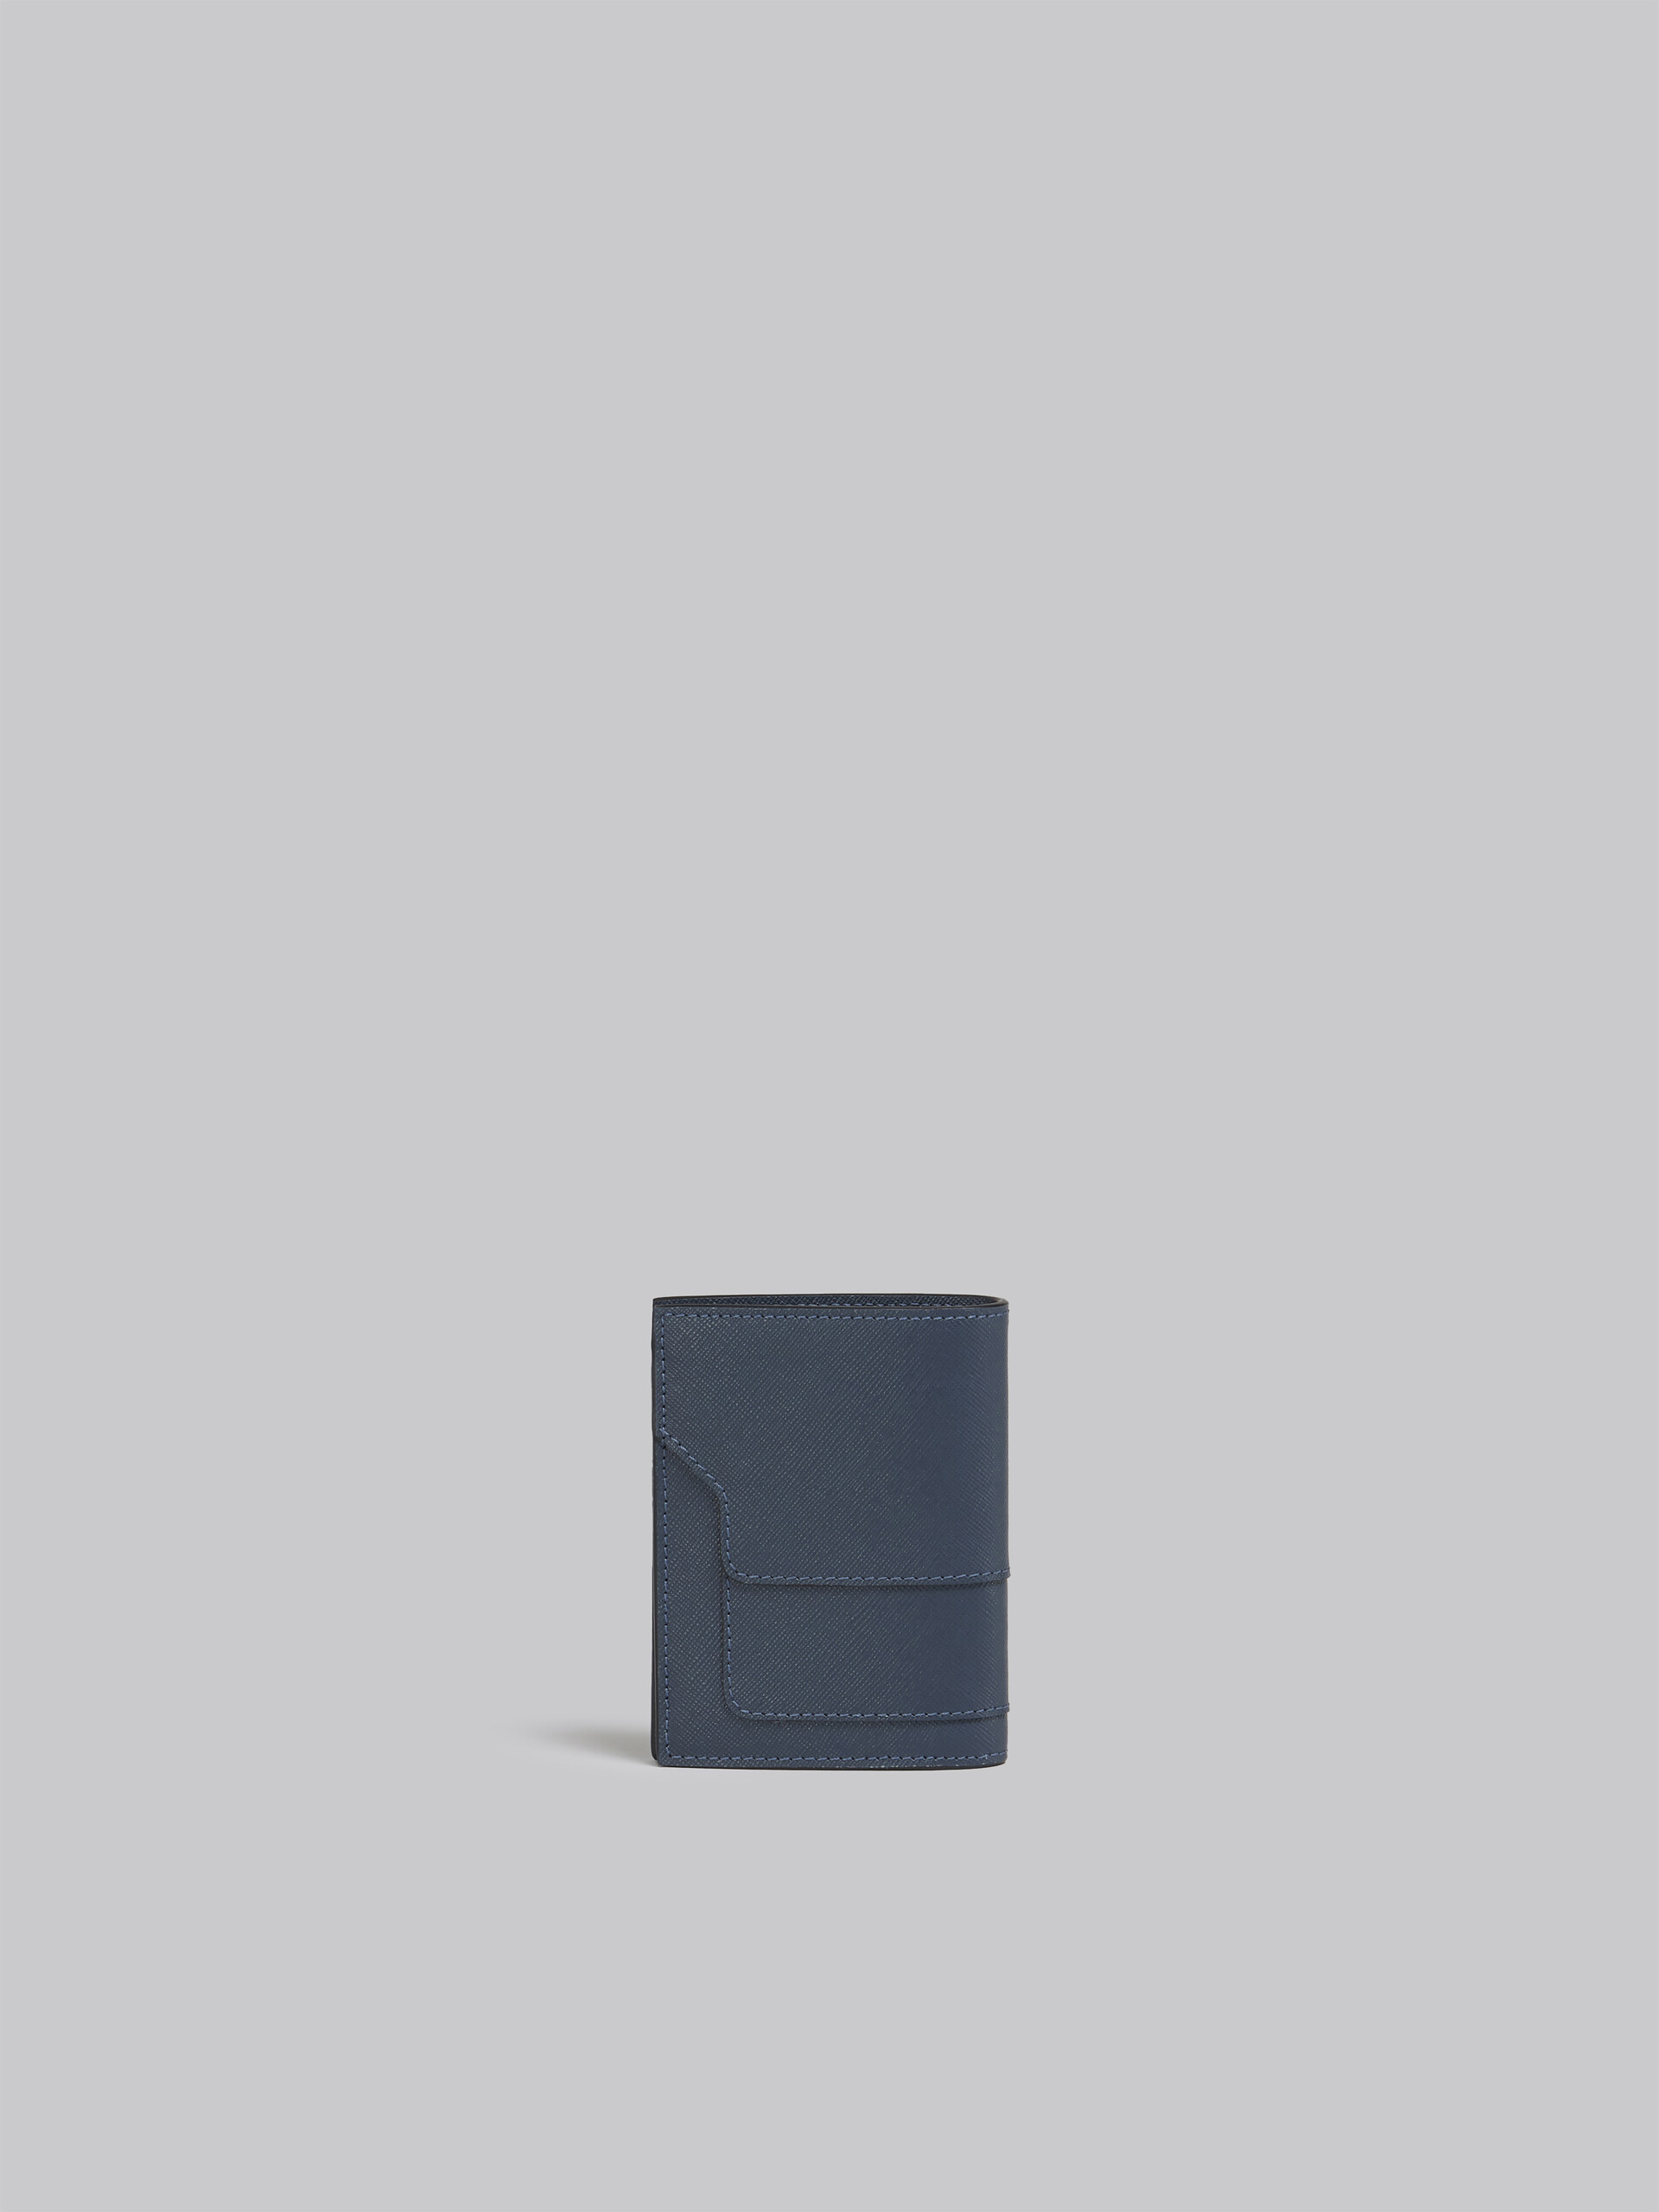 Blue saffiano leather bi-fold wallet - Wallets - Image 3